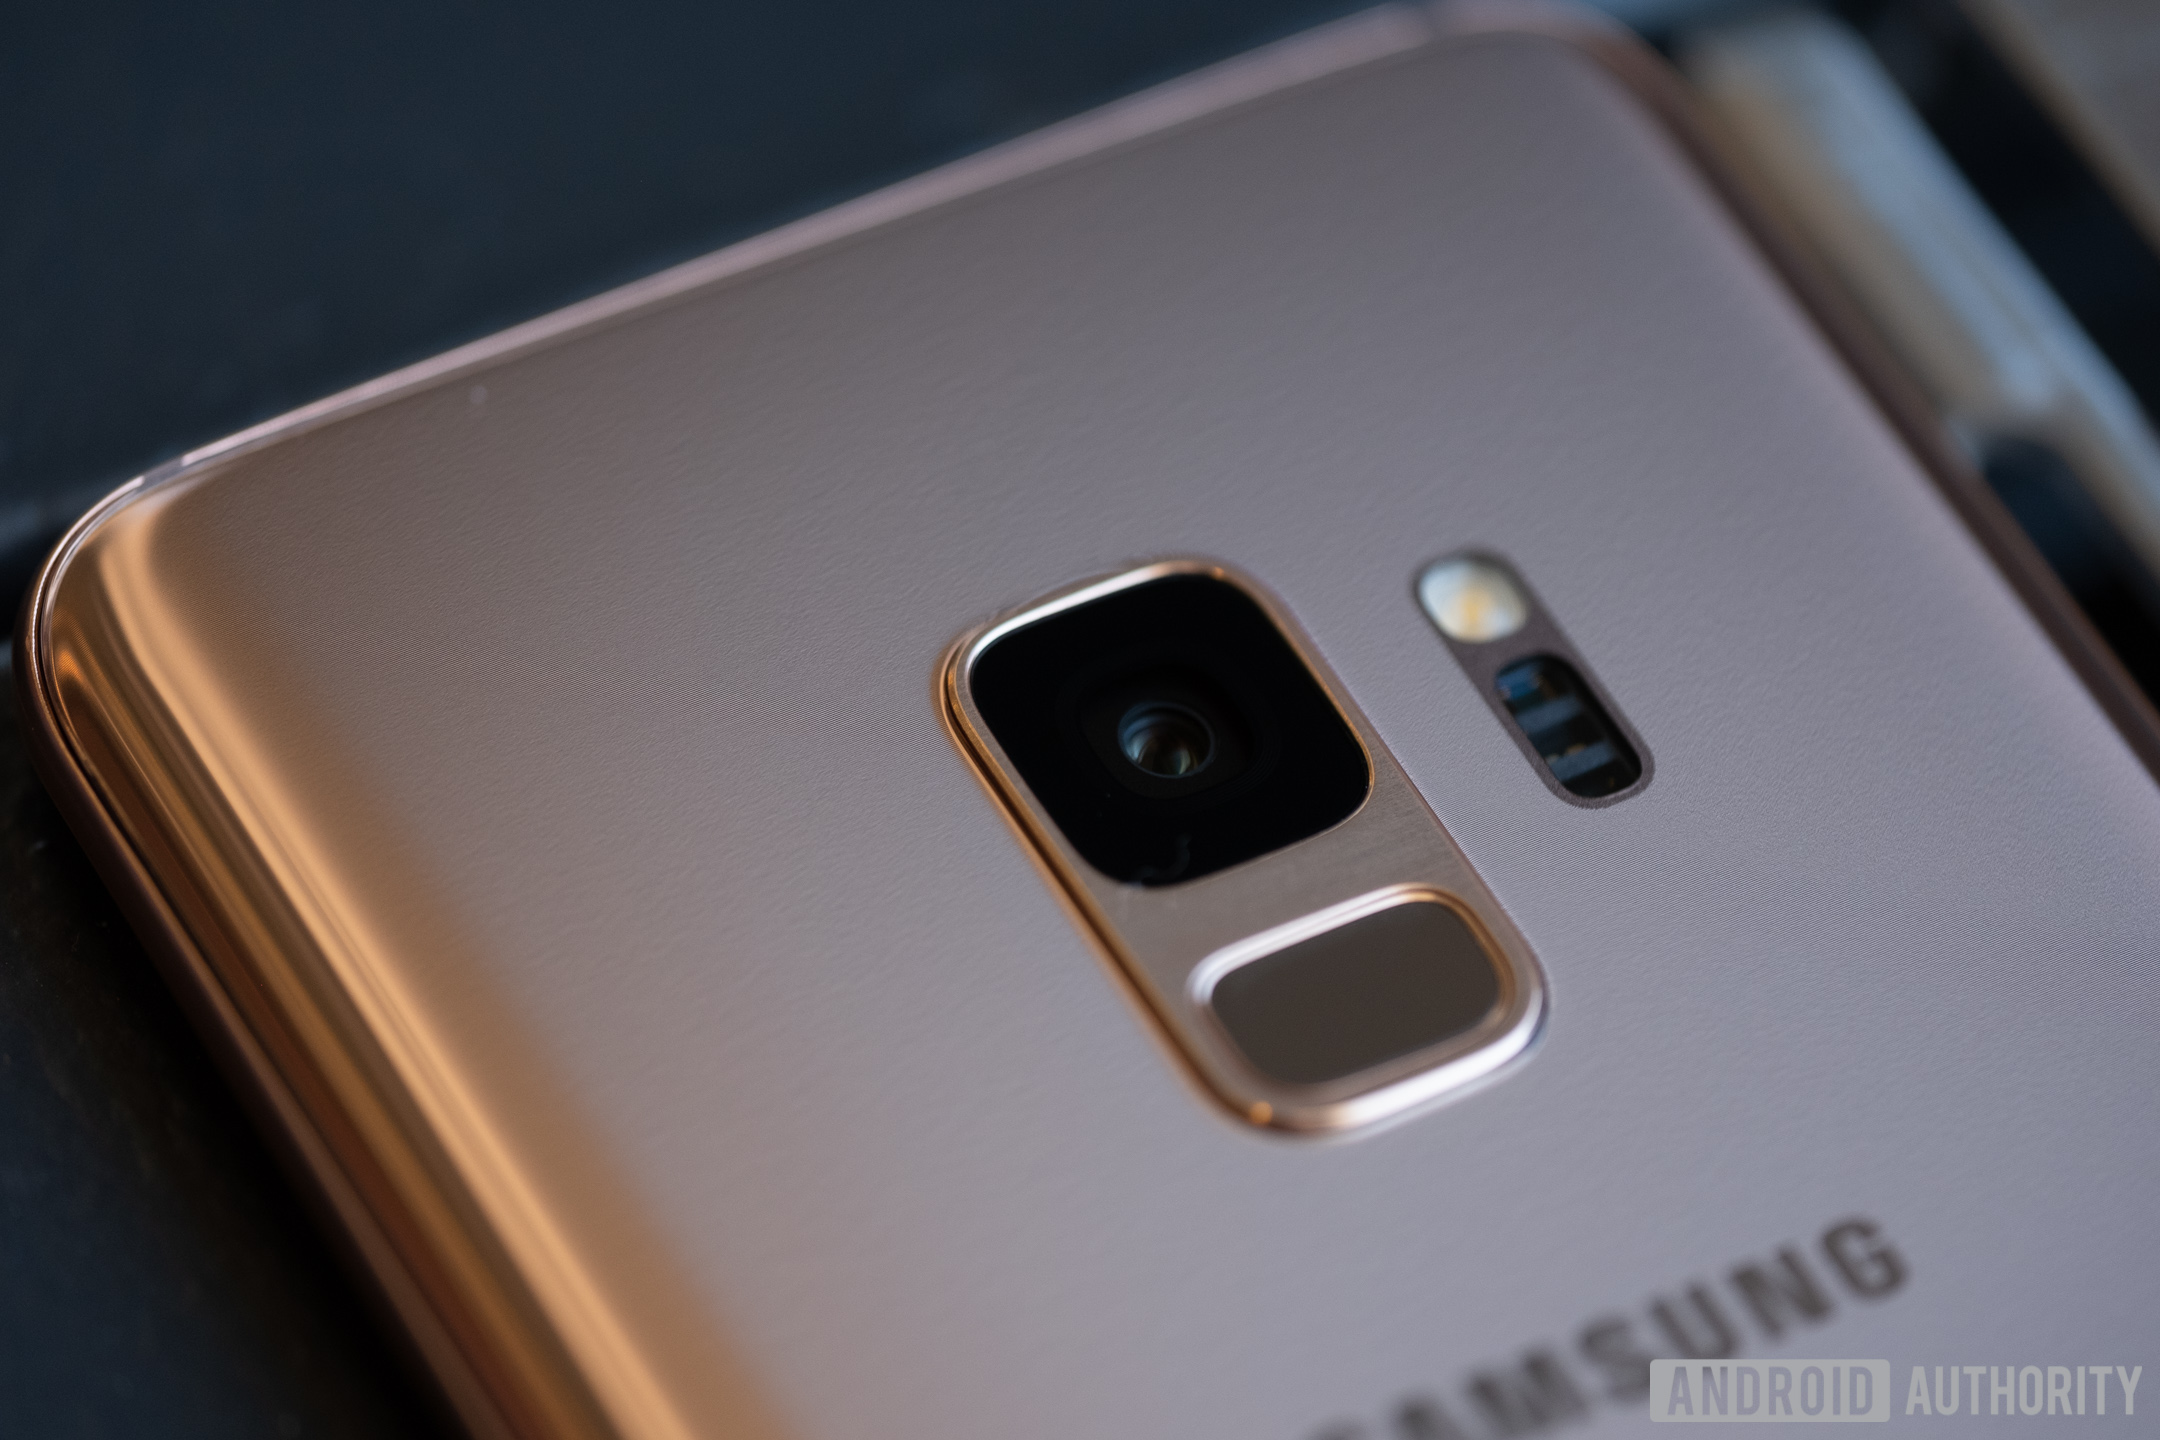 Samsung Galaxy S9 fingerprint sensor